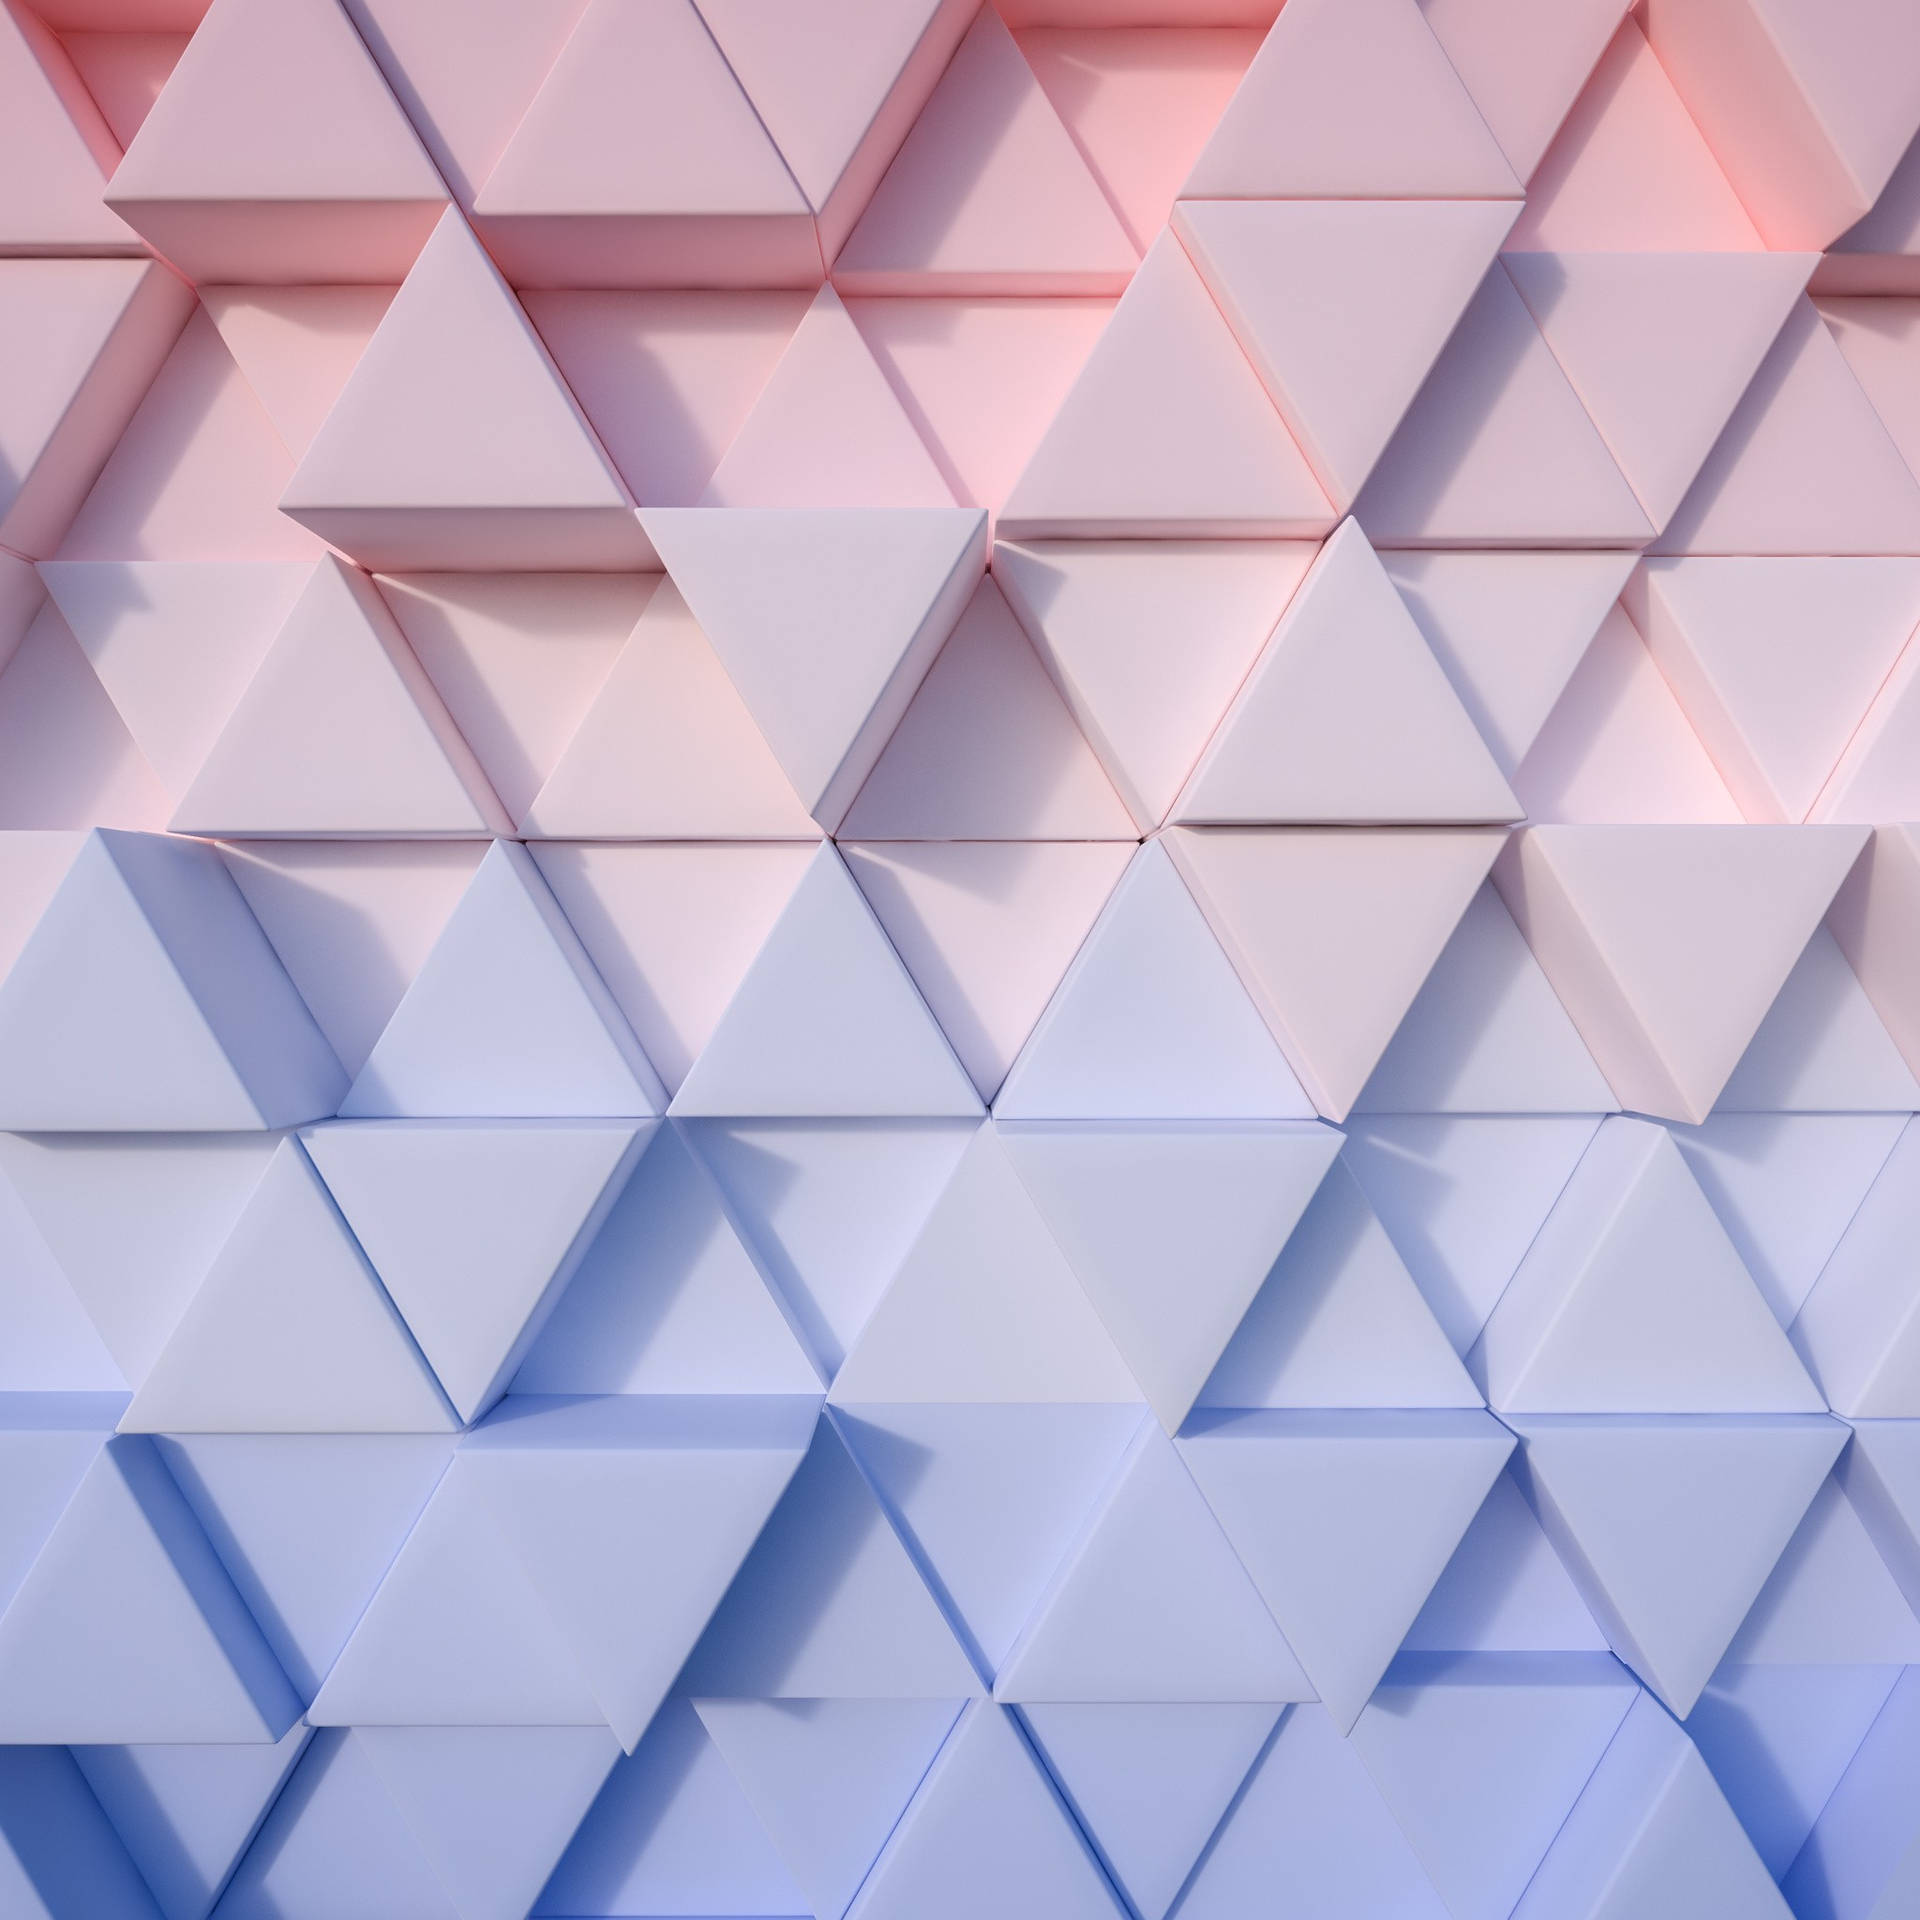 Aesthetic Ipad Triangular Shapes Wallpaper